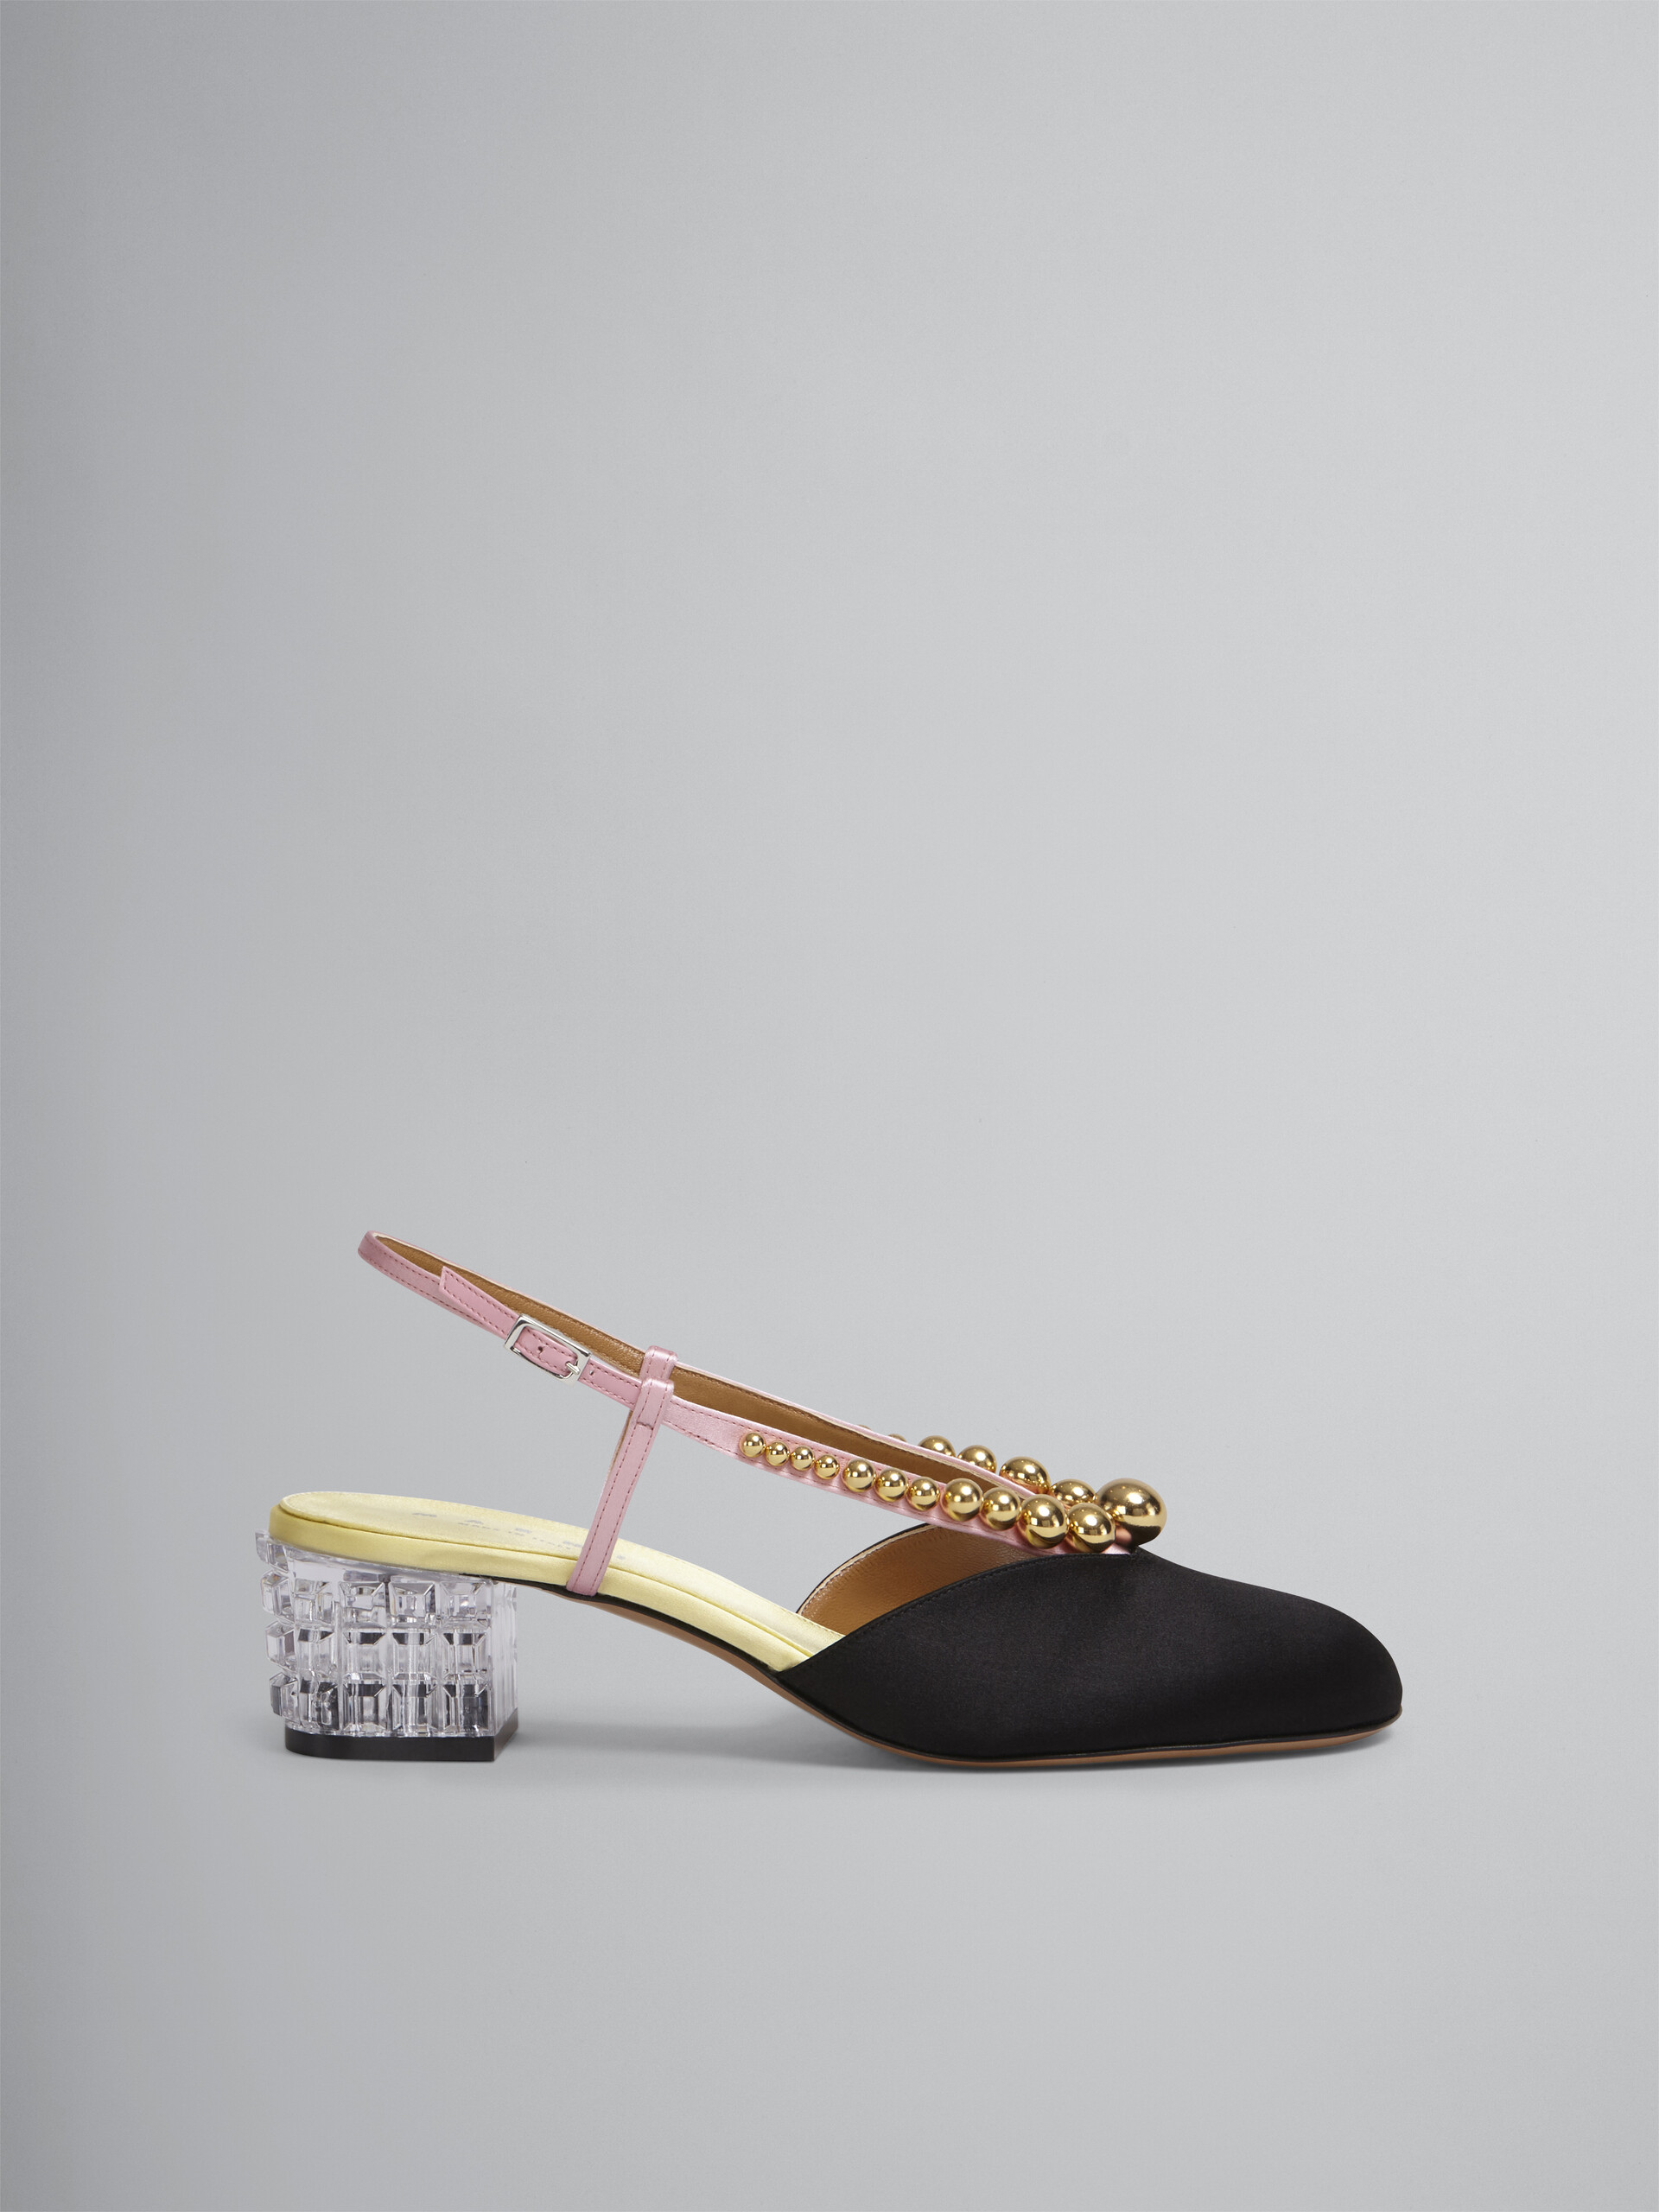 Silk satin pump with sculpted heel in transparent plexiglass - Sandals - Image 1